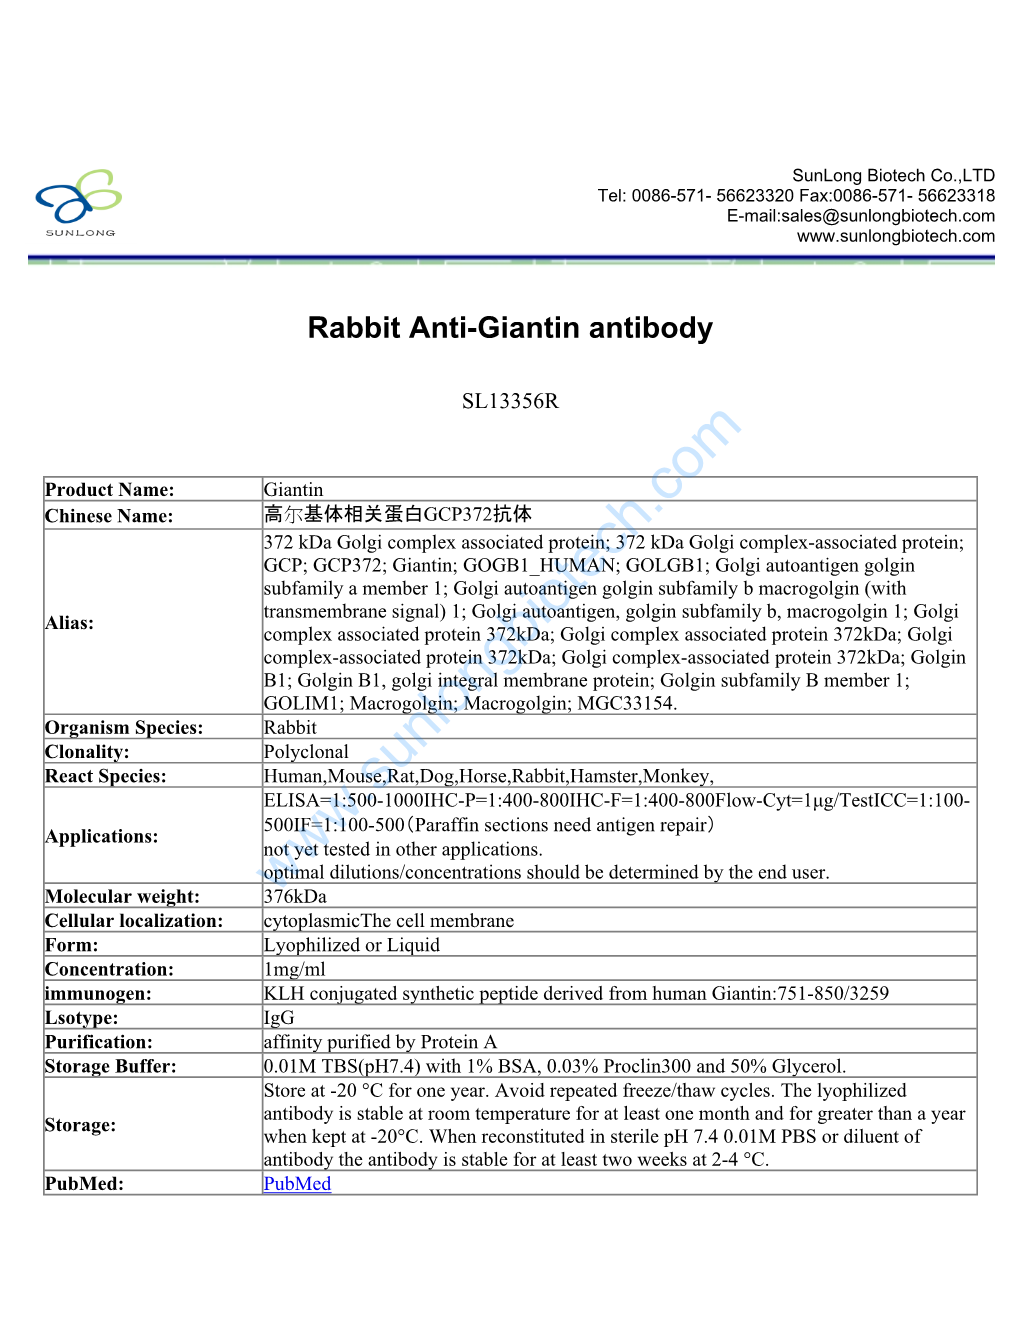 Rabbit Anti-Giantin Antibody-SL13356R